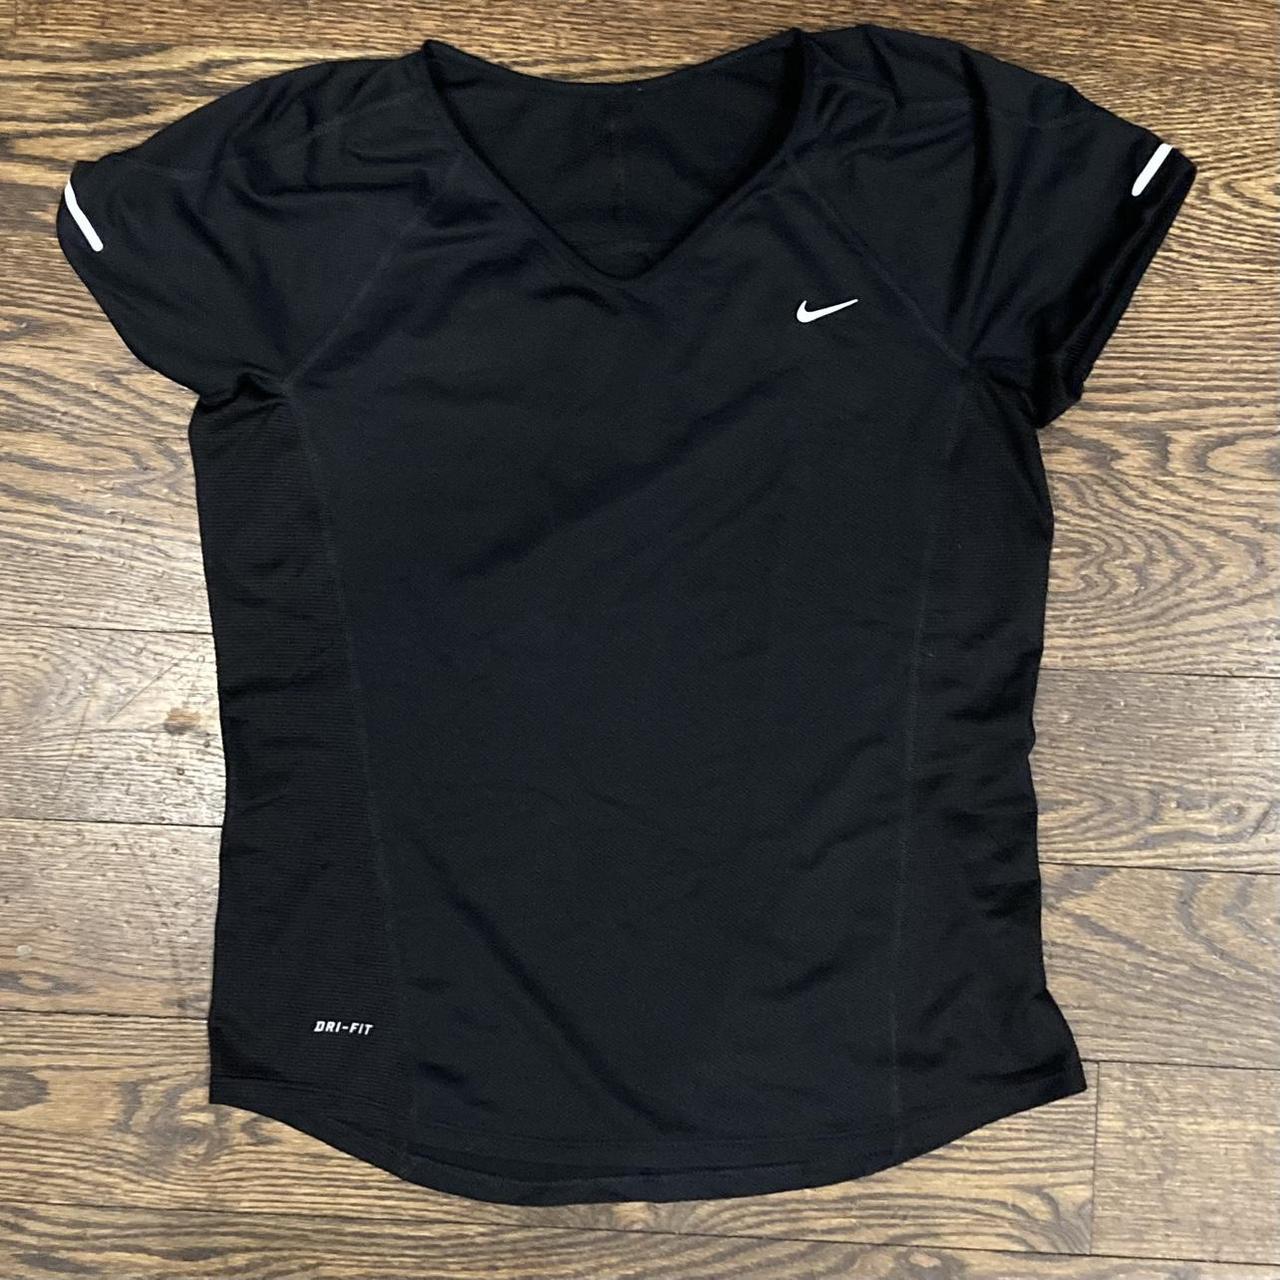 Nike Women's Black Shirt | Depop